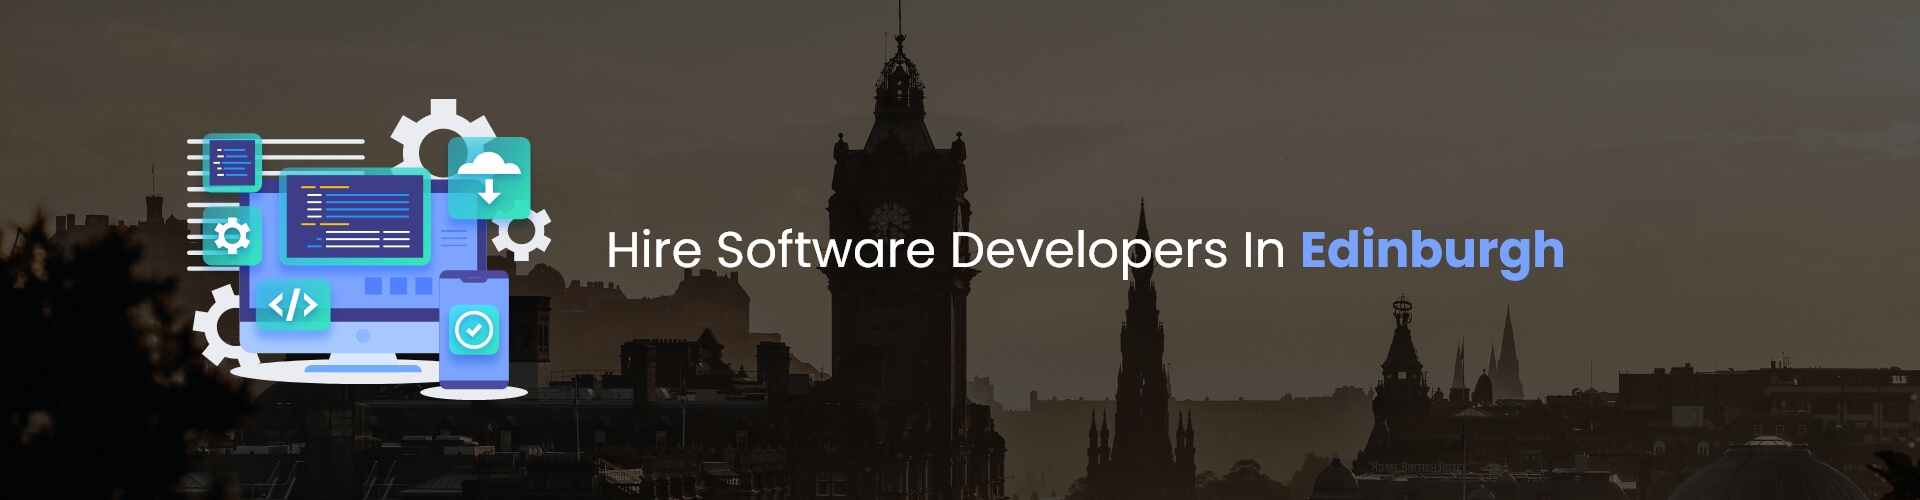 hire software developers in edinburgh